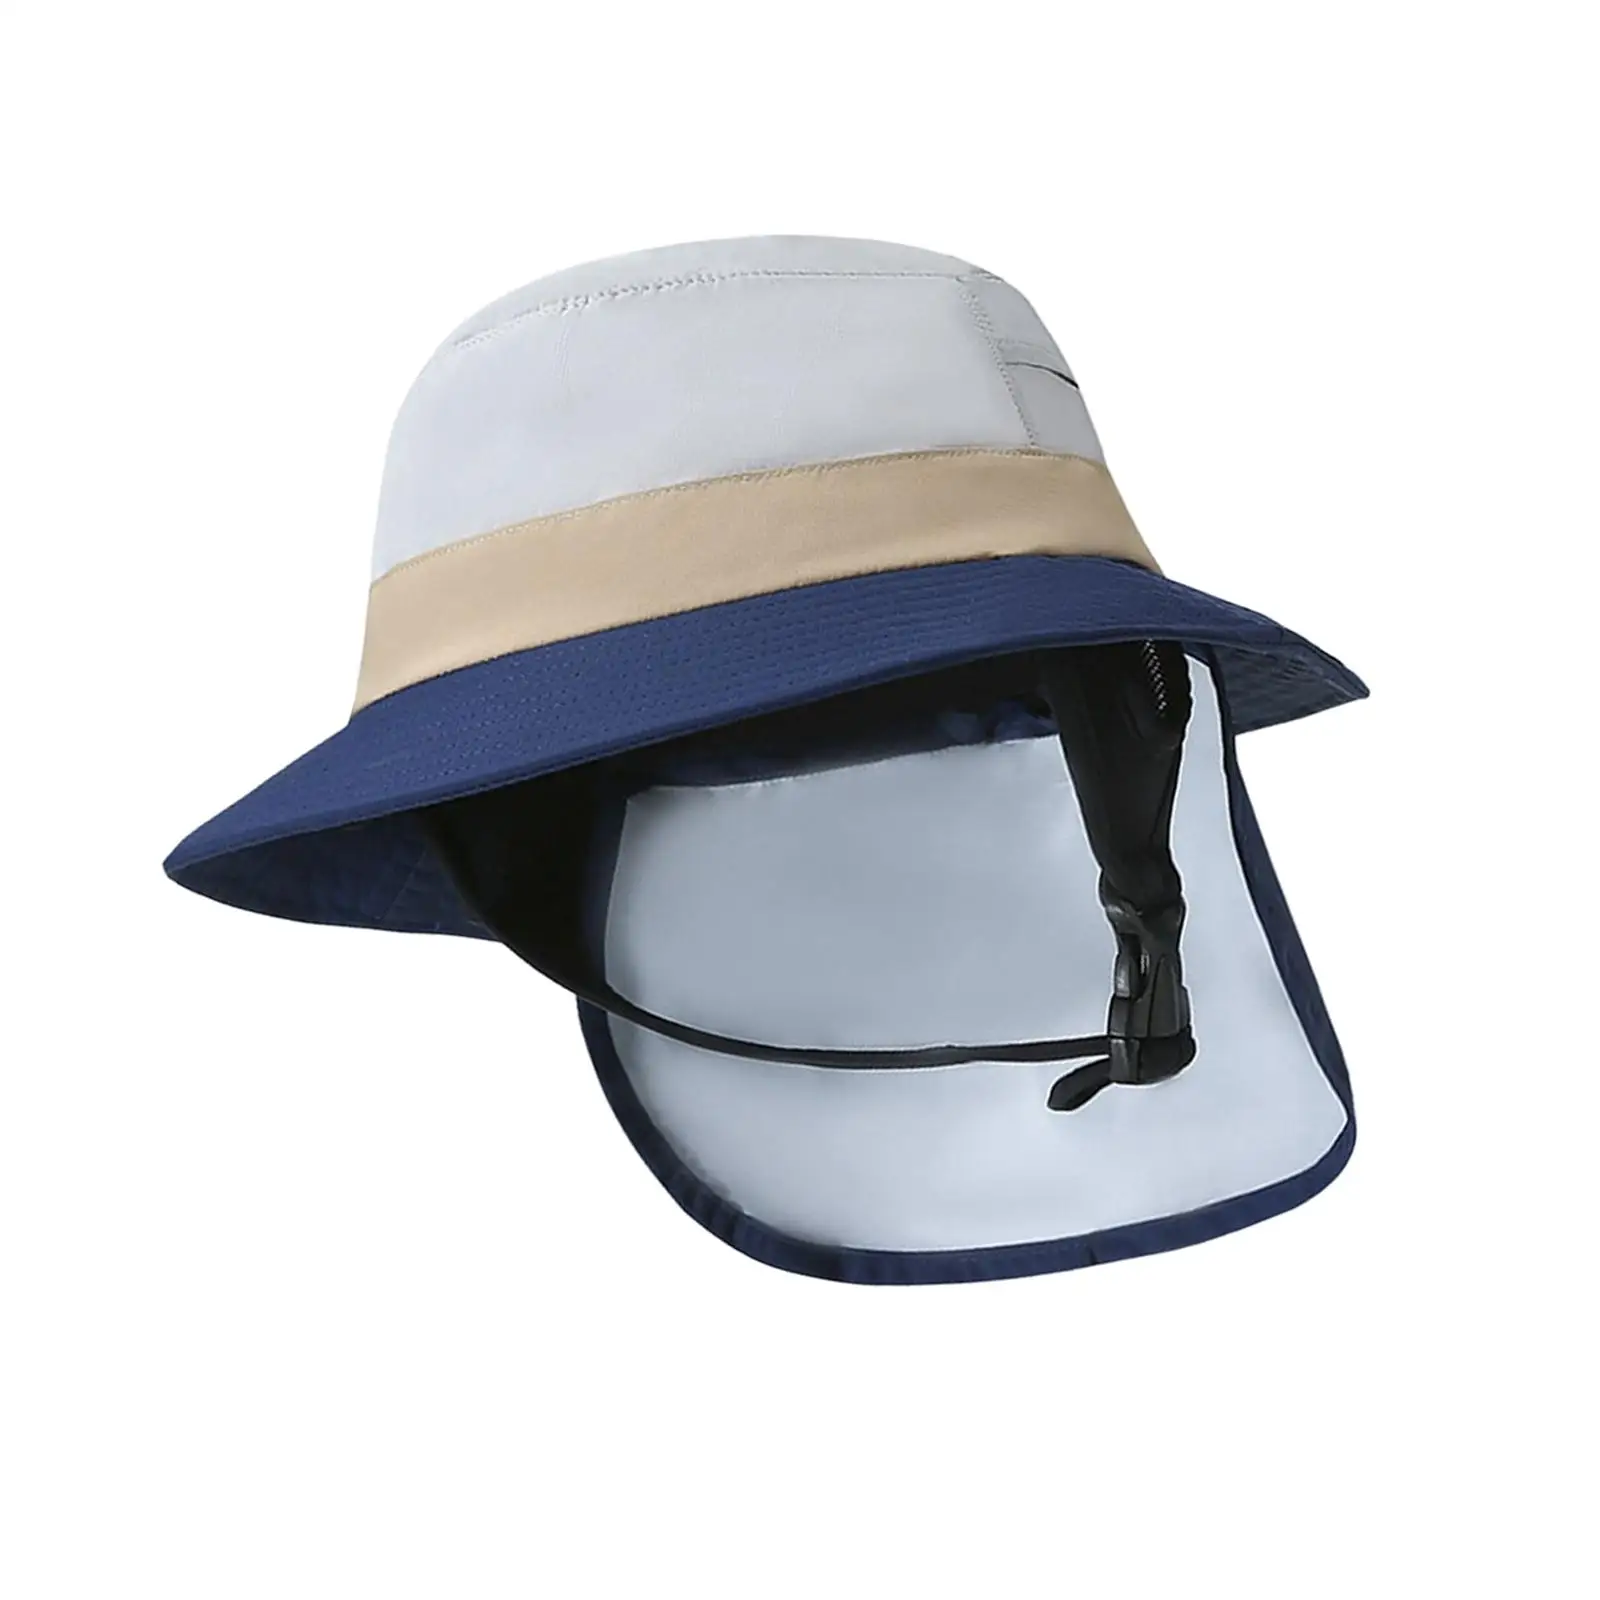 Surf Bucket Hat Protection Wide Brim Waterproof Windproof Fisherman Hat for Fishing Outdoor Hunting Camping Men Women Teens